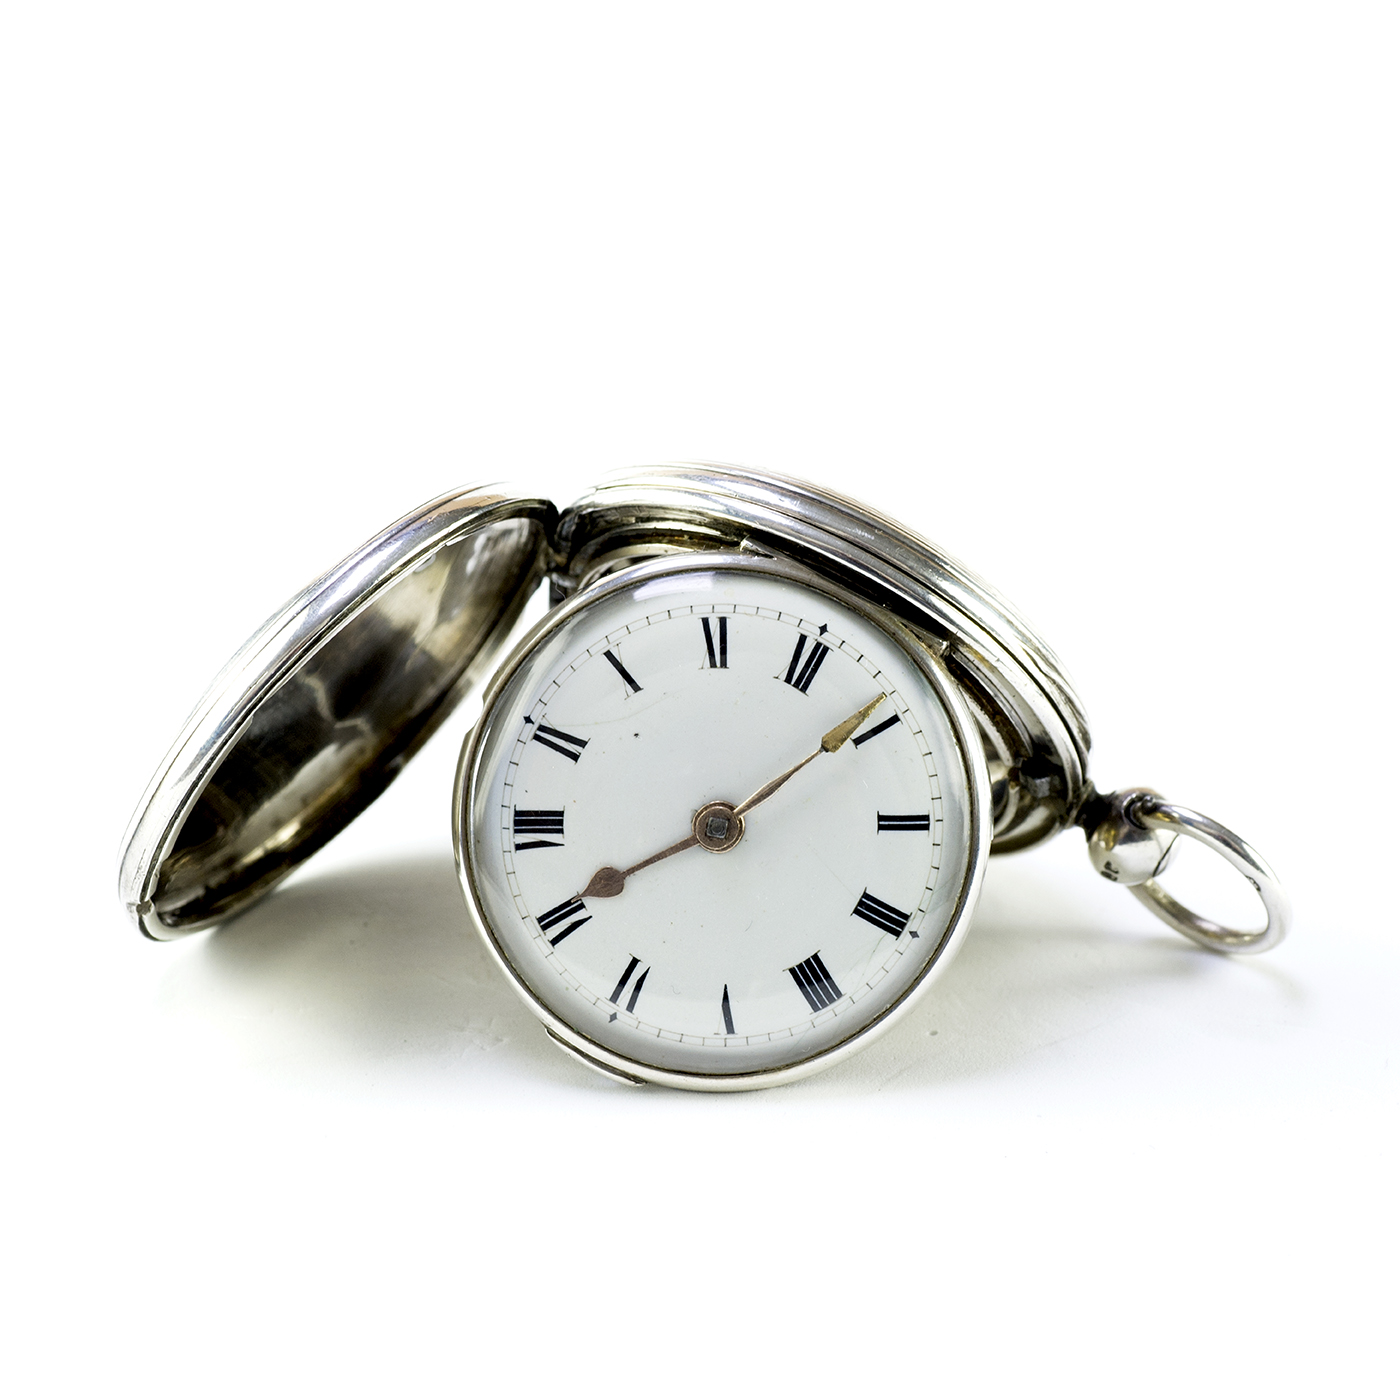 H. GORFIN (Devonport). Reloj Inglés de Bolsillo, saboneta, Verge Fusee (Catalino), Londres, 1832.